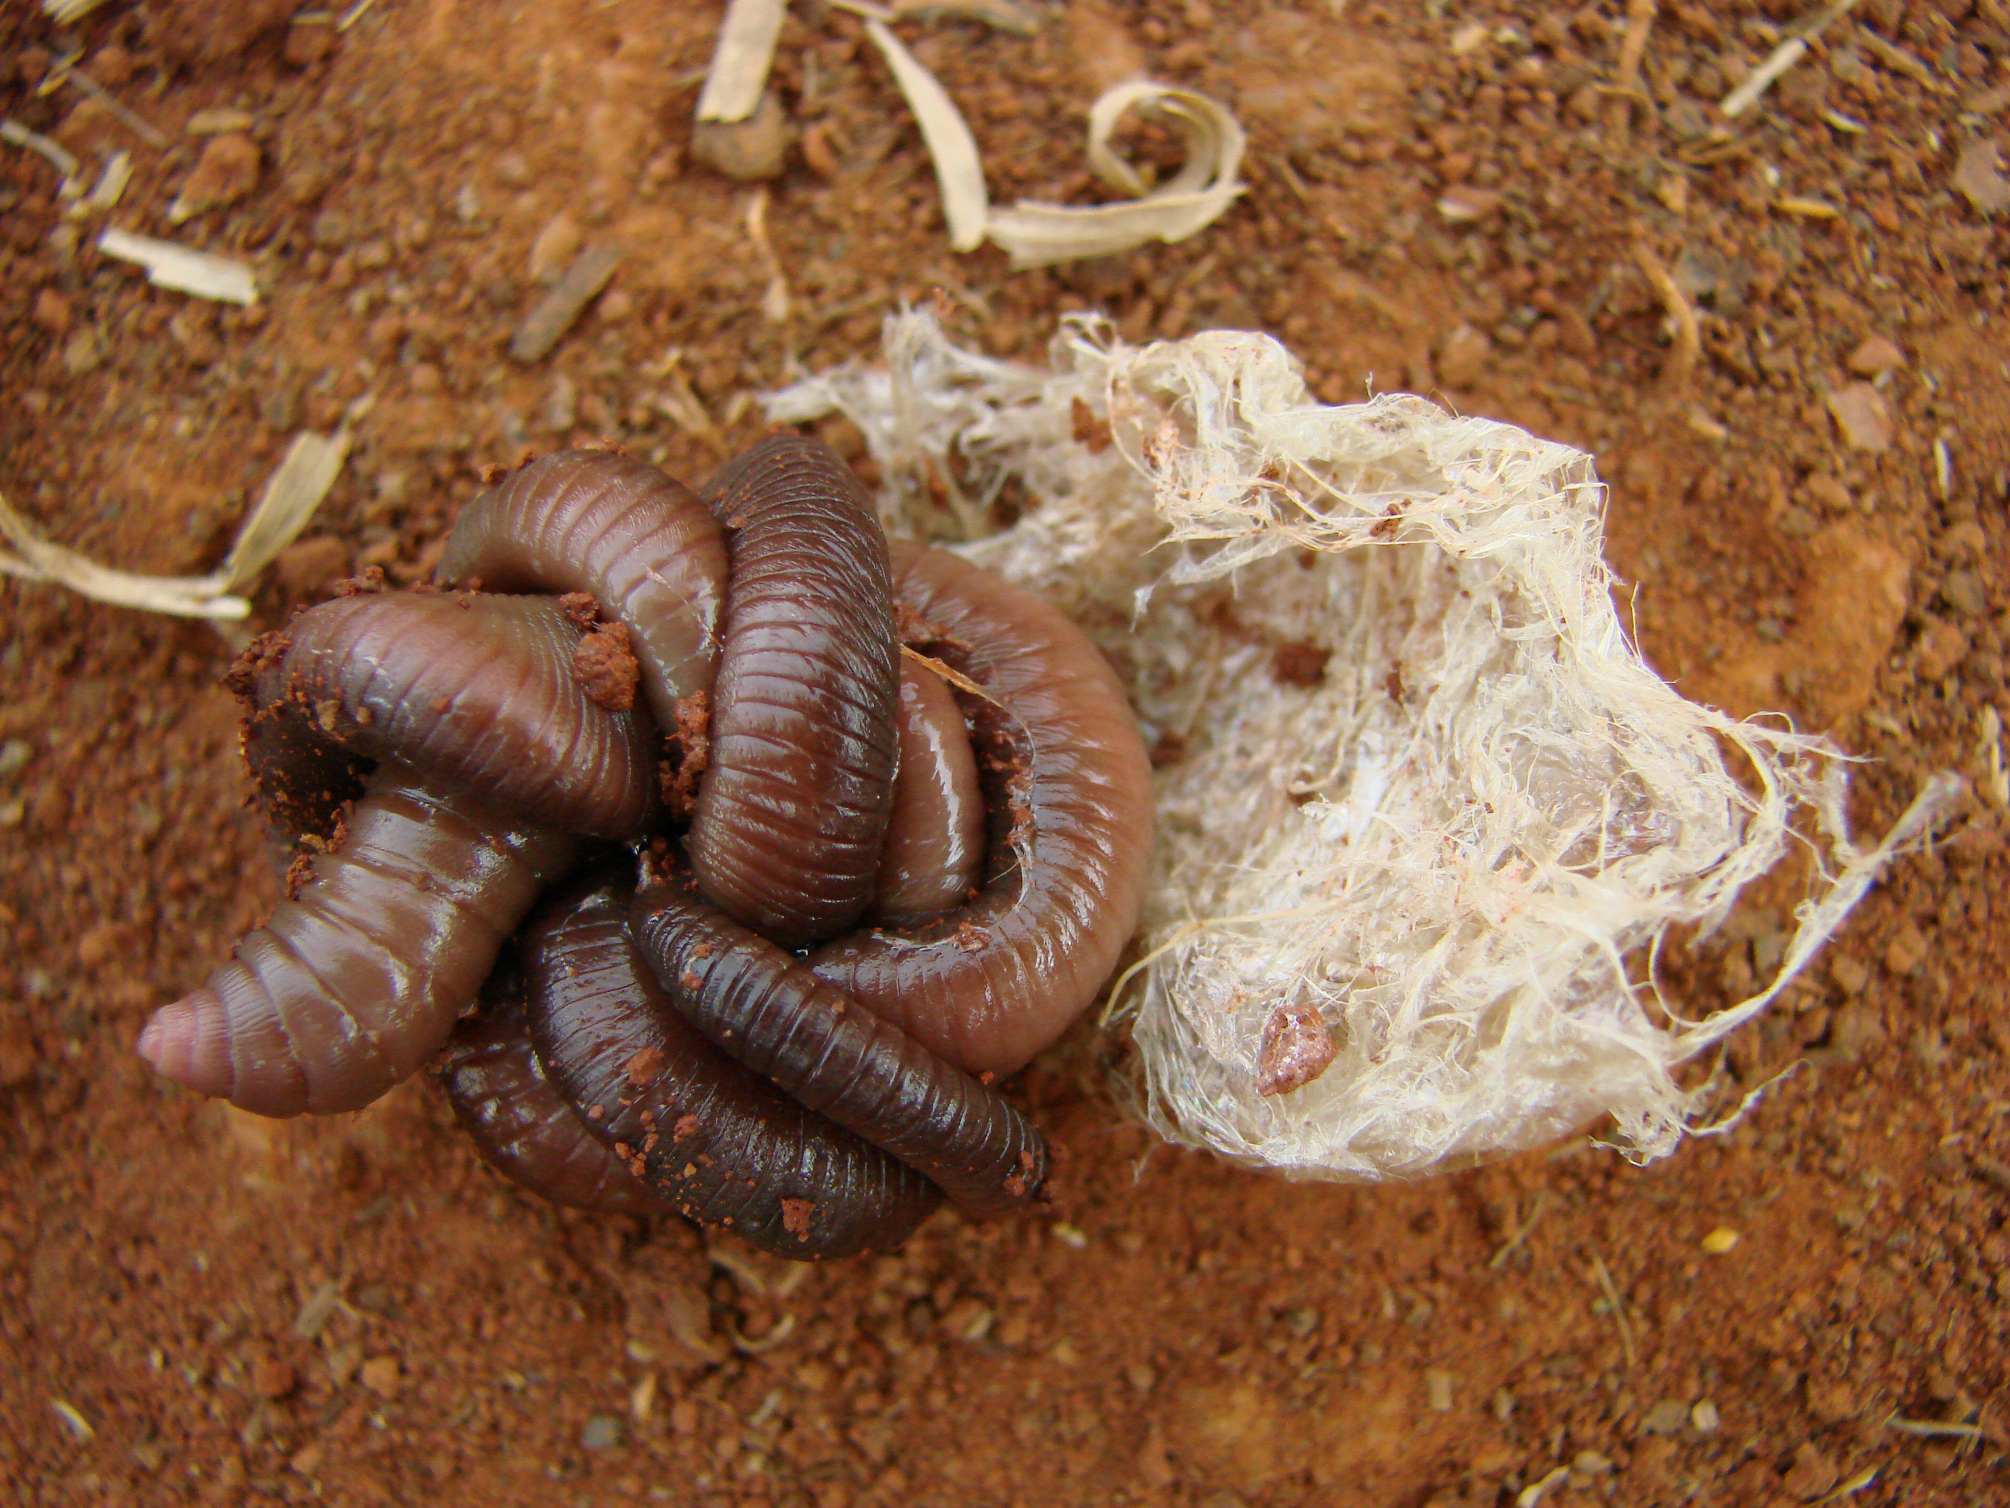 Large earthworm entangled itself on the ground